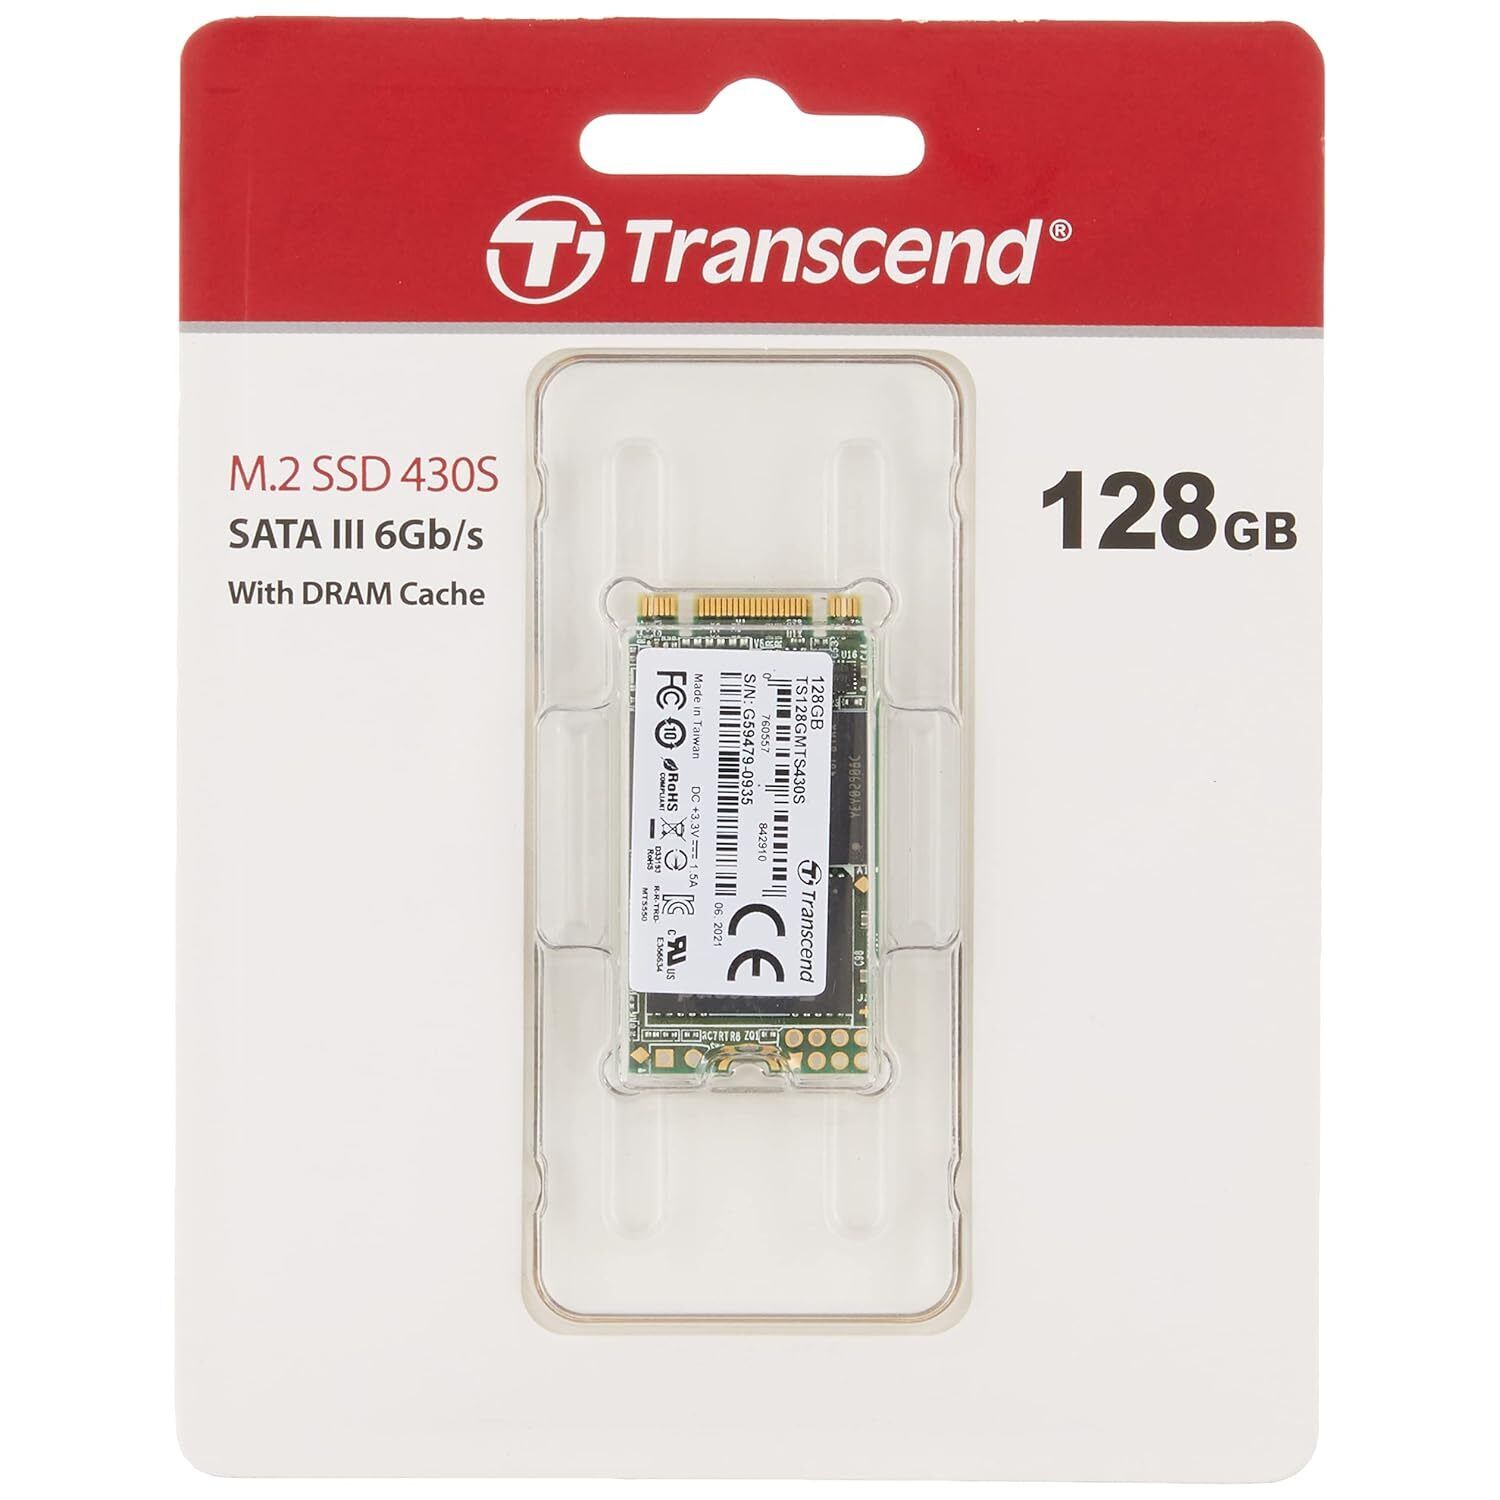 Transcend 128GB SATA III 6Gb/s MTS430S 42 mm M.2 SSD Solid State Drive (TS128G